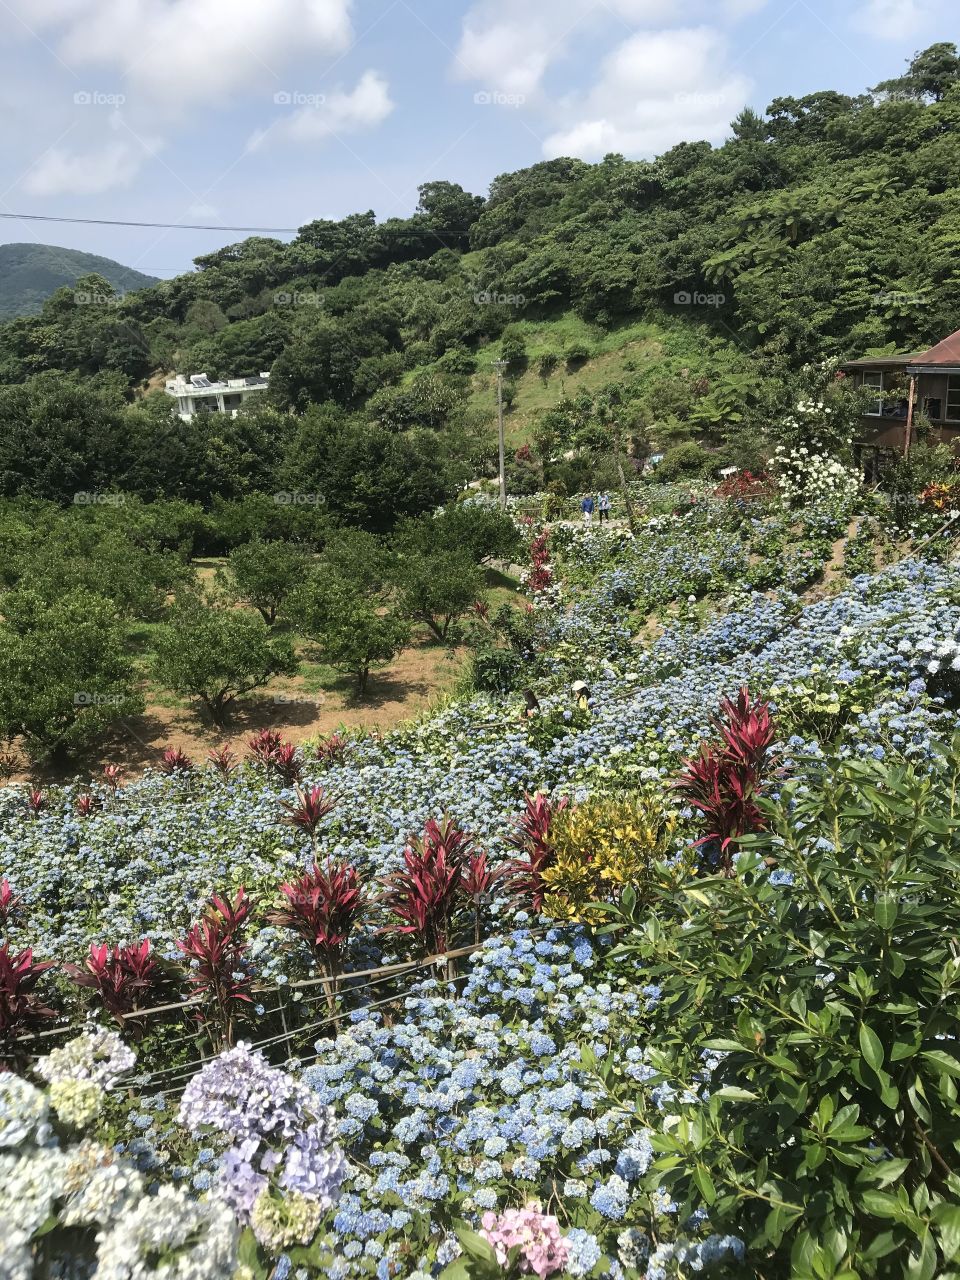 Hydrangea garden yohena Okinawa japan